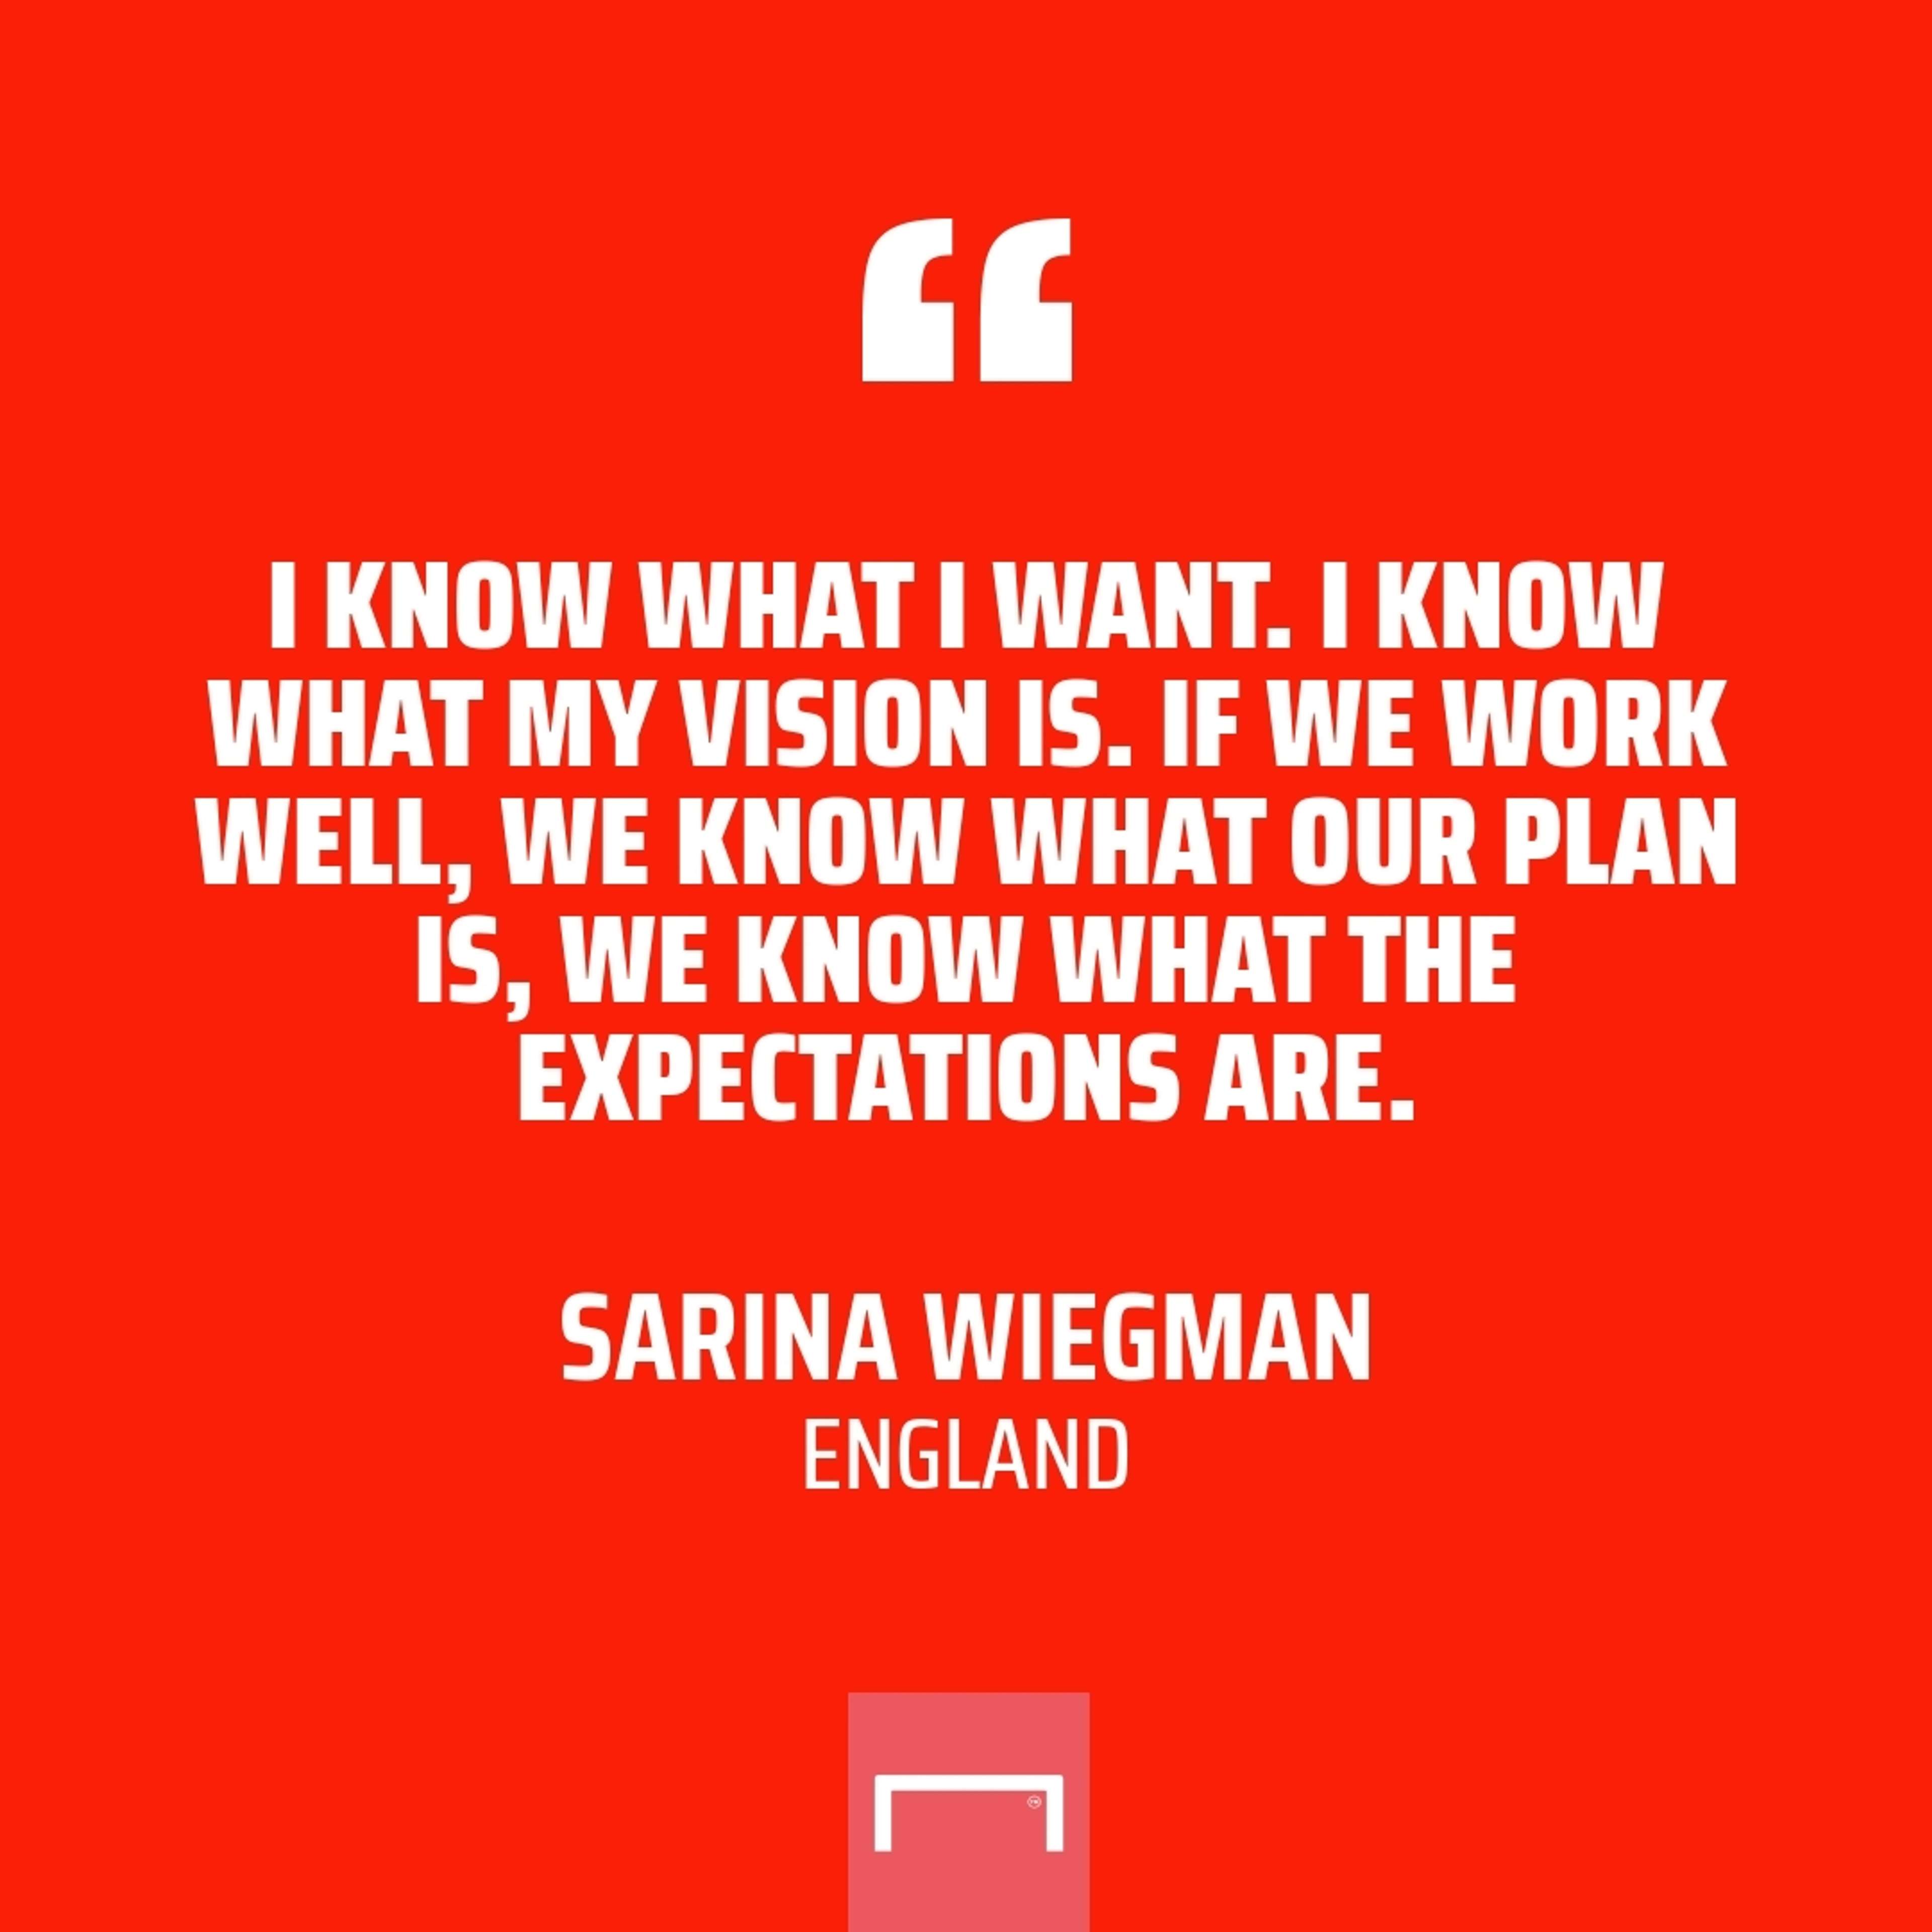 Sarina Wiegman quote PS gfx 1:1